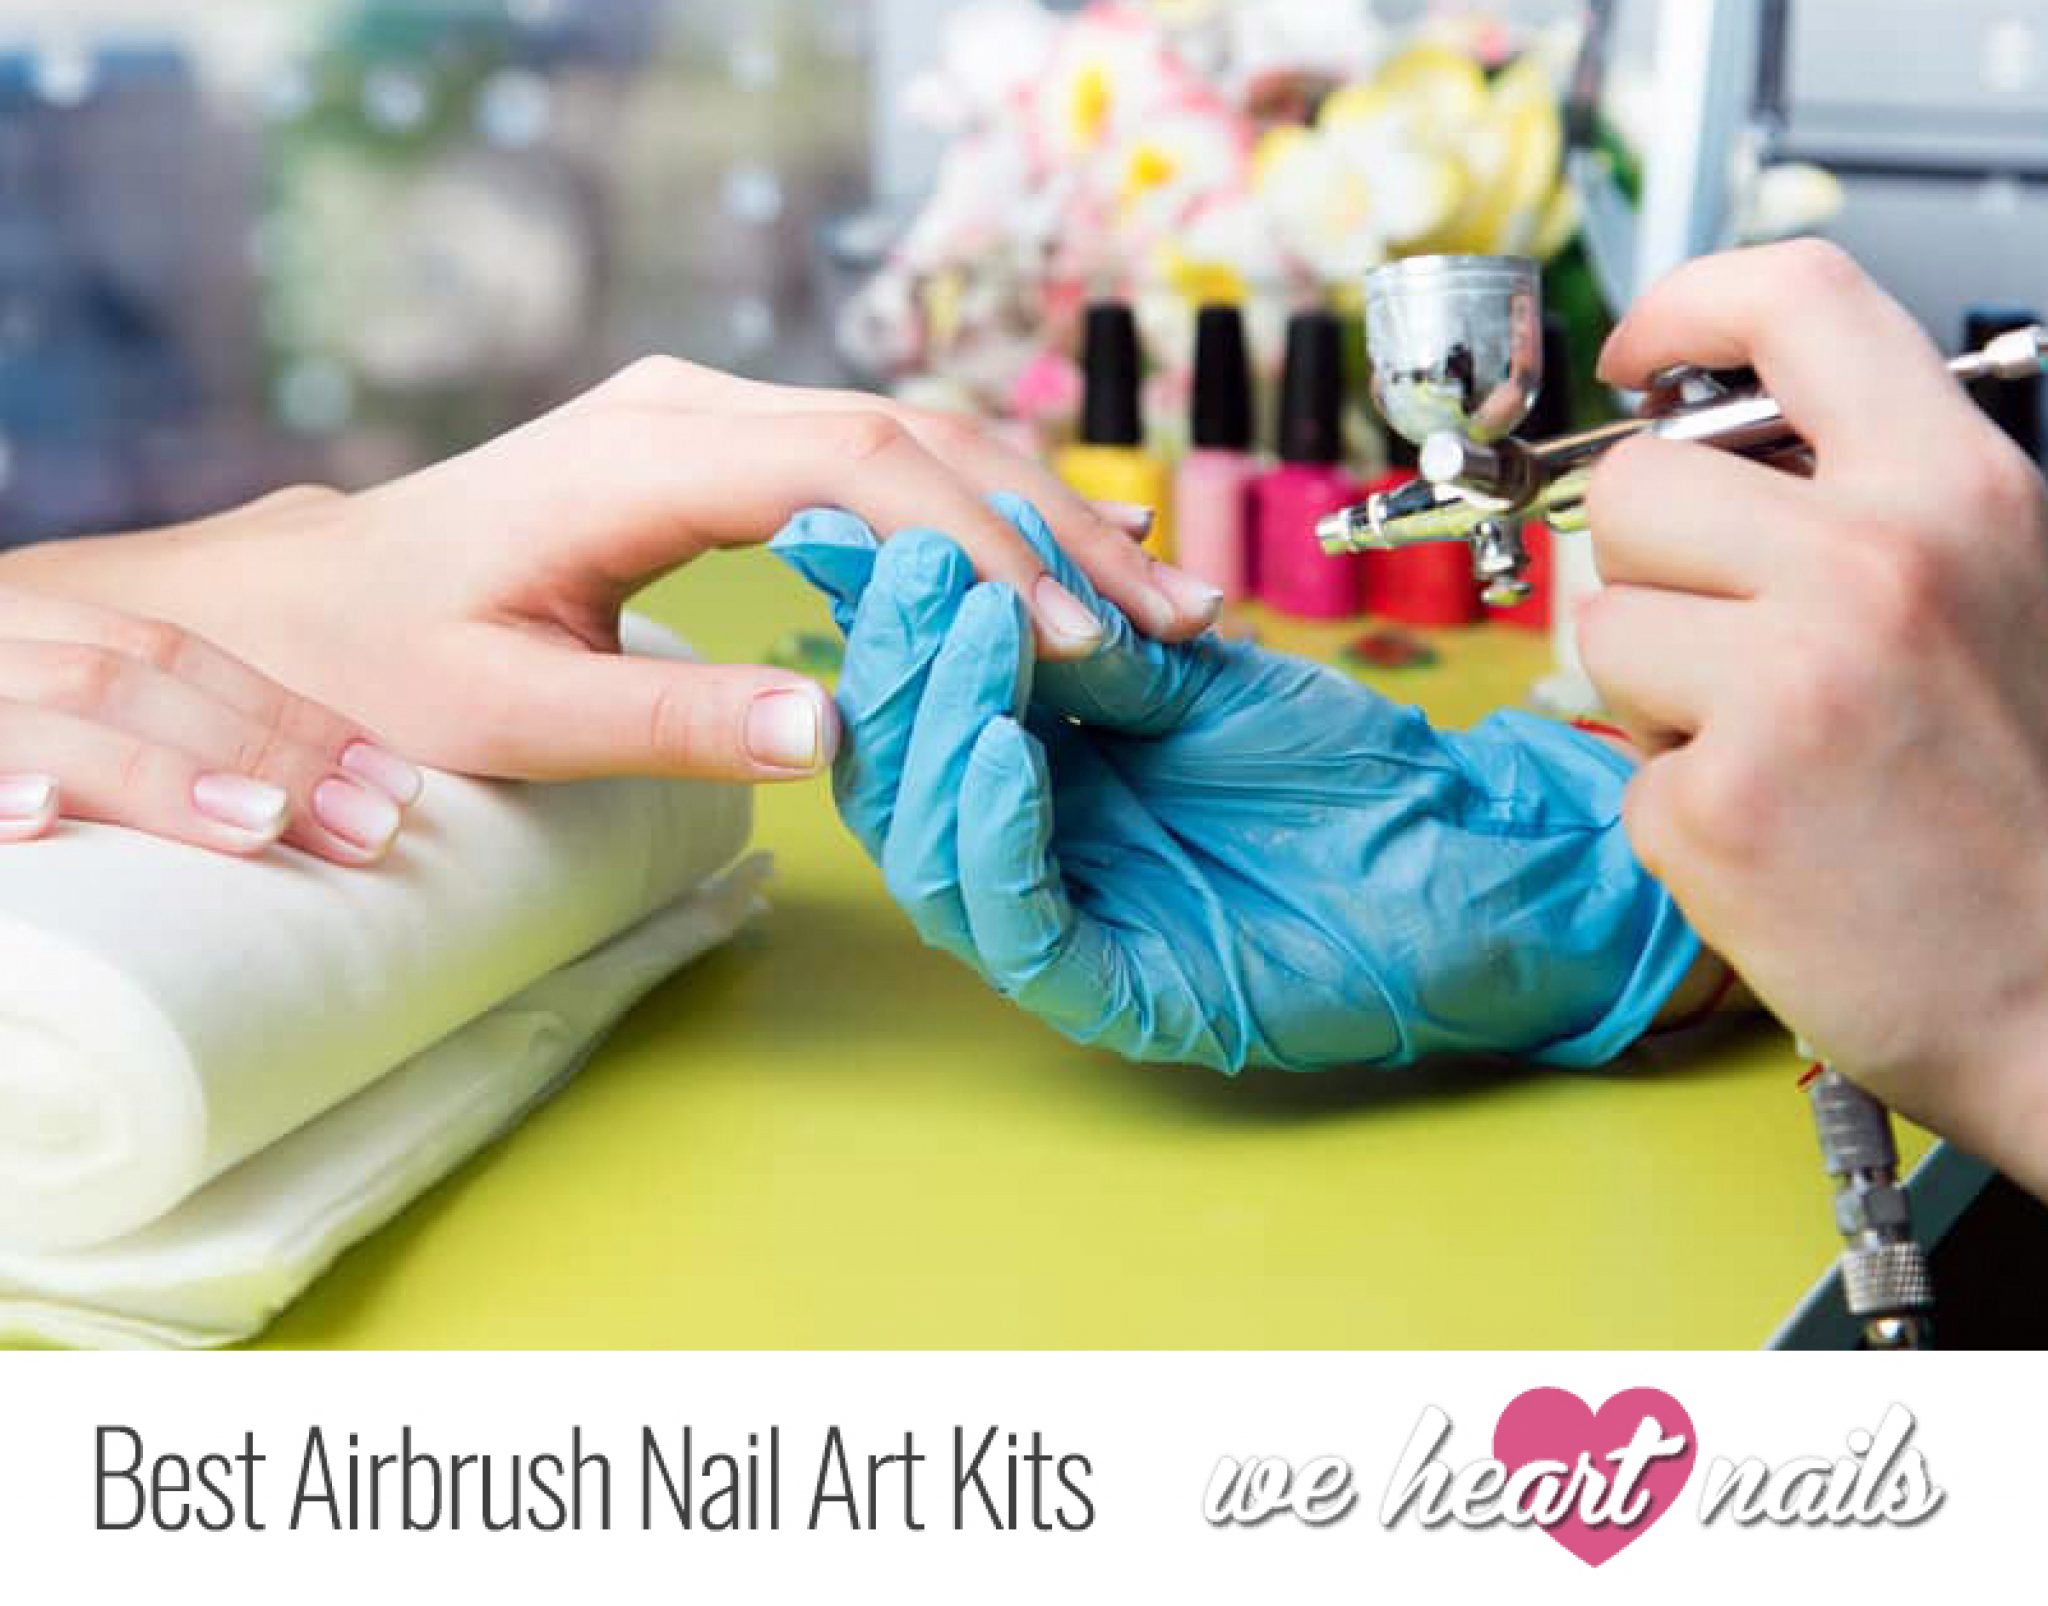 3. Custom Airbrush Nail Art Designs for Sale on Instagram - wide 8